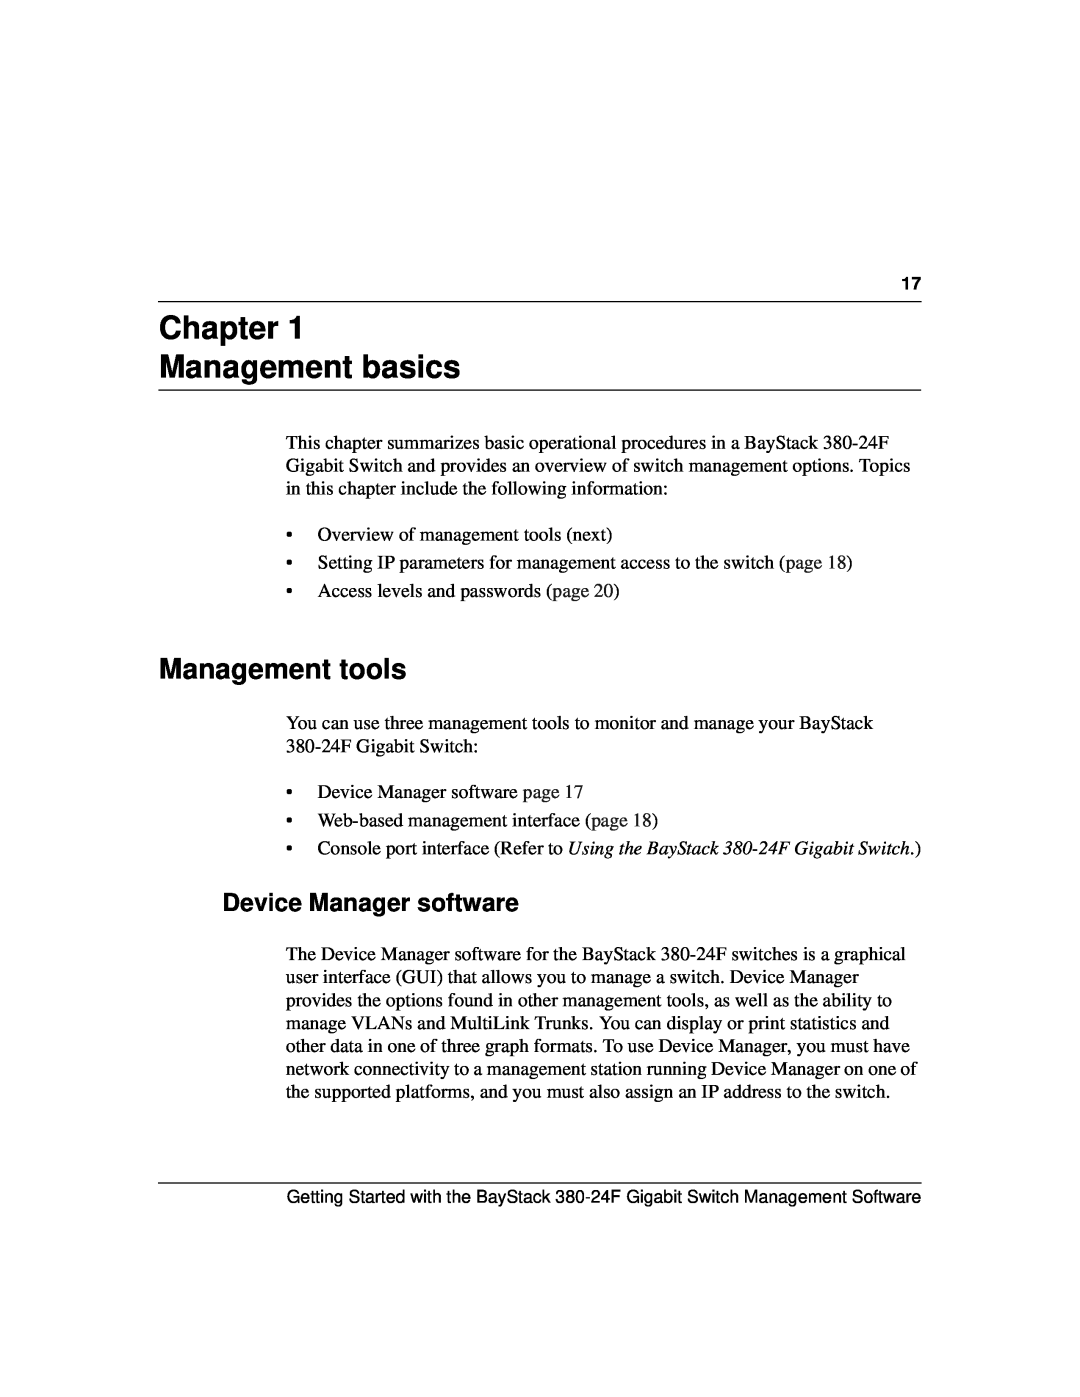 Nortel Networks 380-24F manual Chapter Management basics, Management tools, Device Manager software 